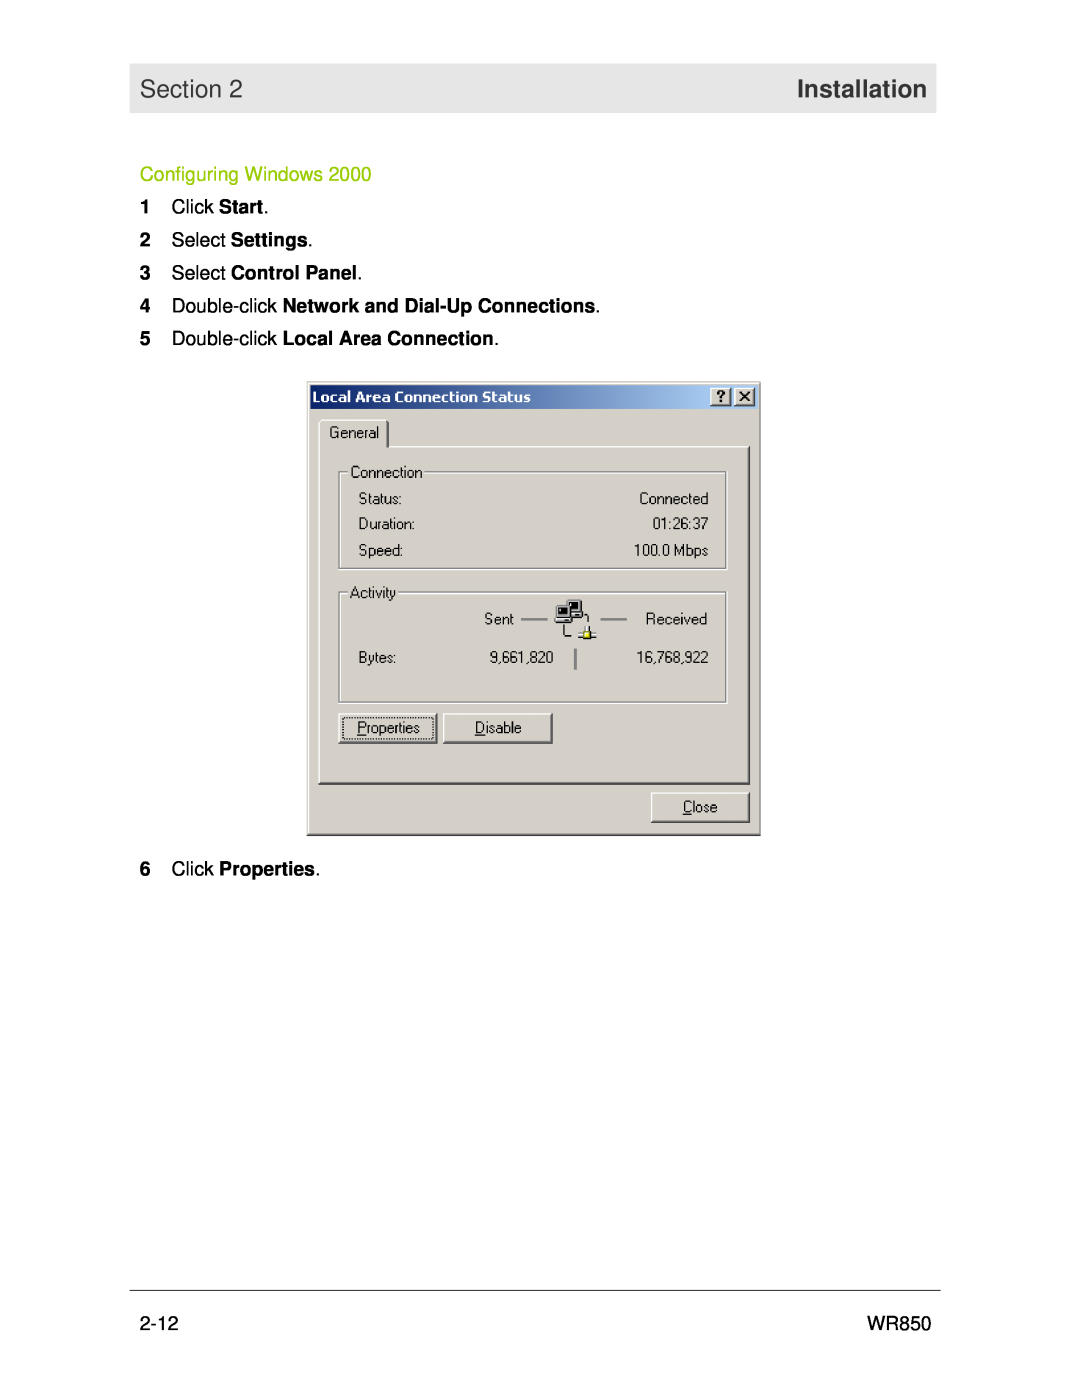 Motorola WR850 manual Configuring Windows, Section, Installation, Click Start 2 Select Settings, 2-12 